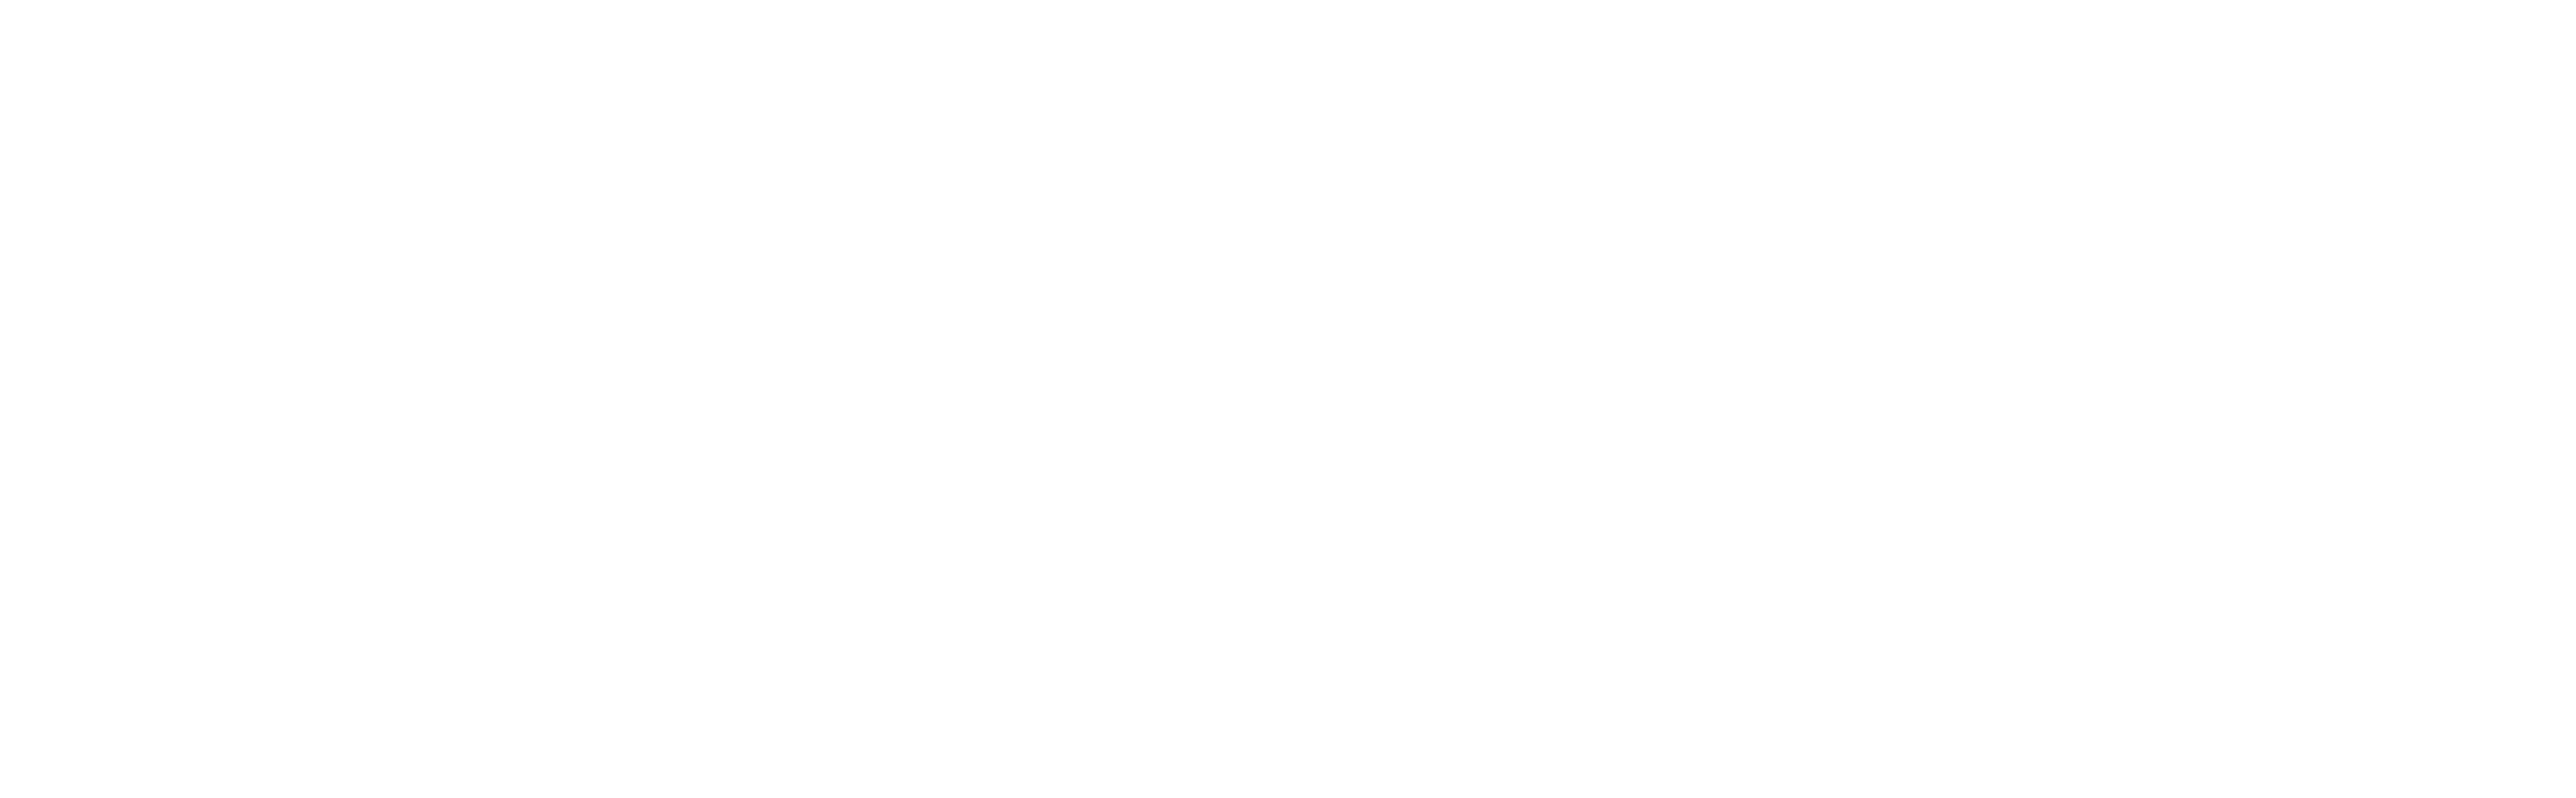 Prime Fx Markets Forex Trading Provider